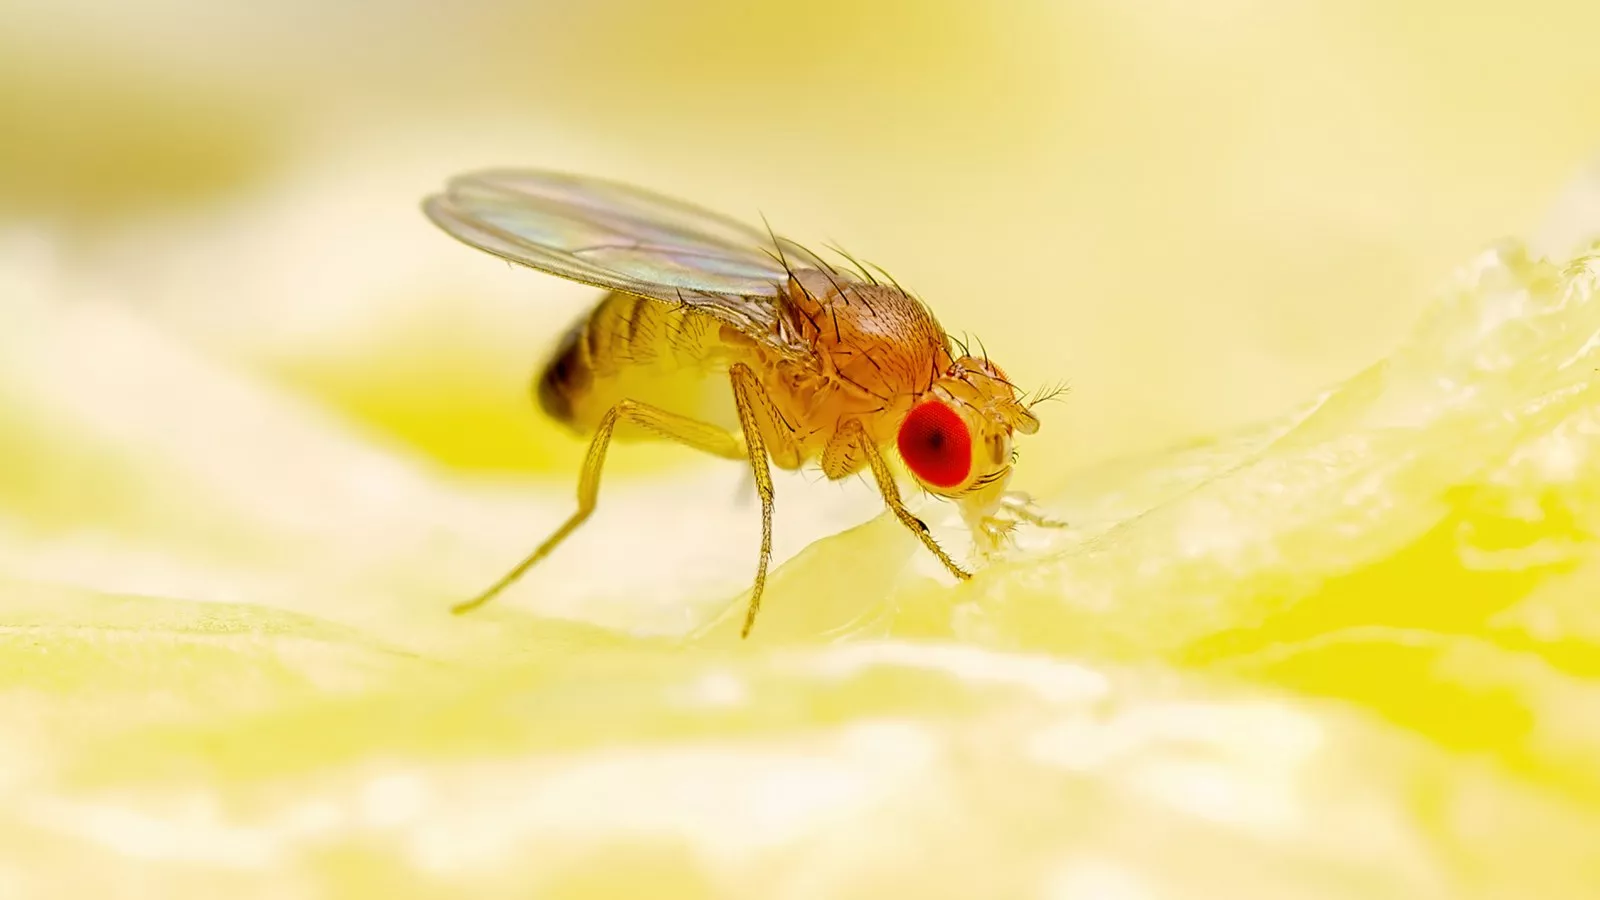 https://d.newsweek.com/en/full/2027434/simple-diy-hacks-kill-fruit-flies.webp?w=1600&h=900&q=88&f=c00563bd939d7a5da499edabed941c24